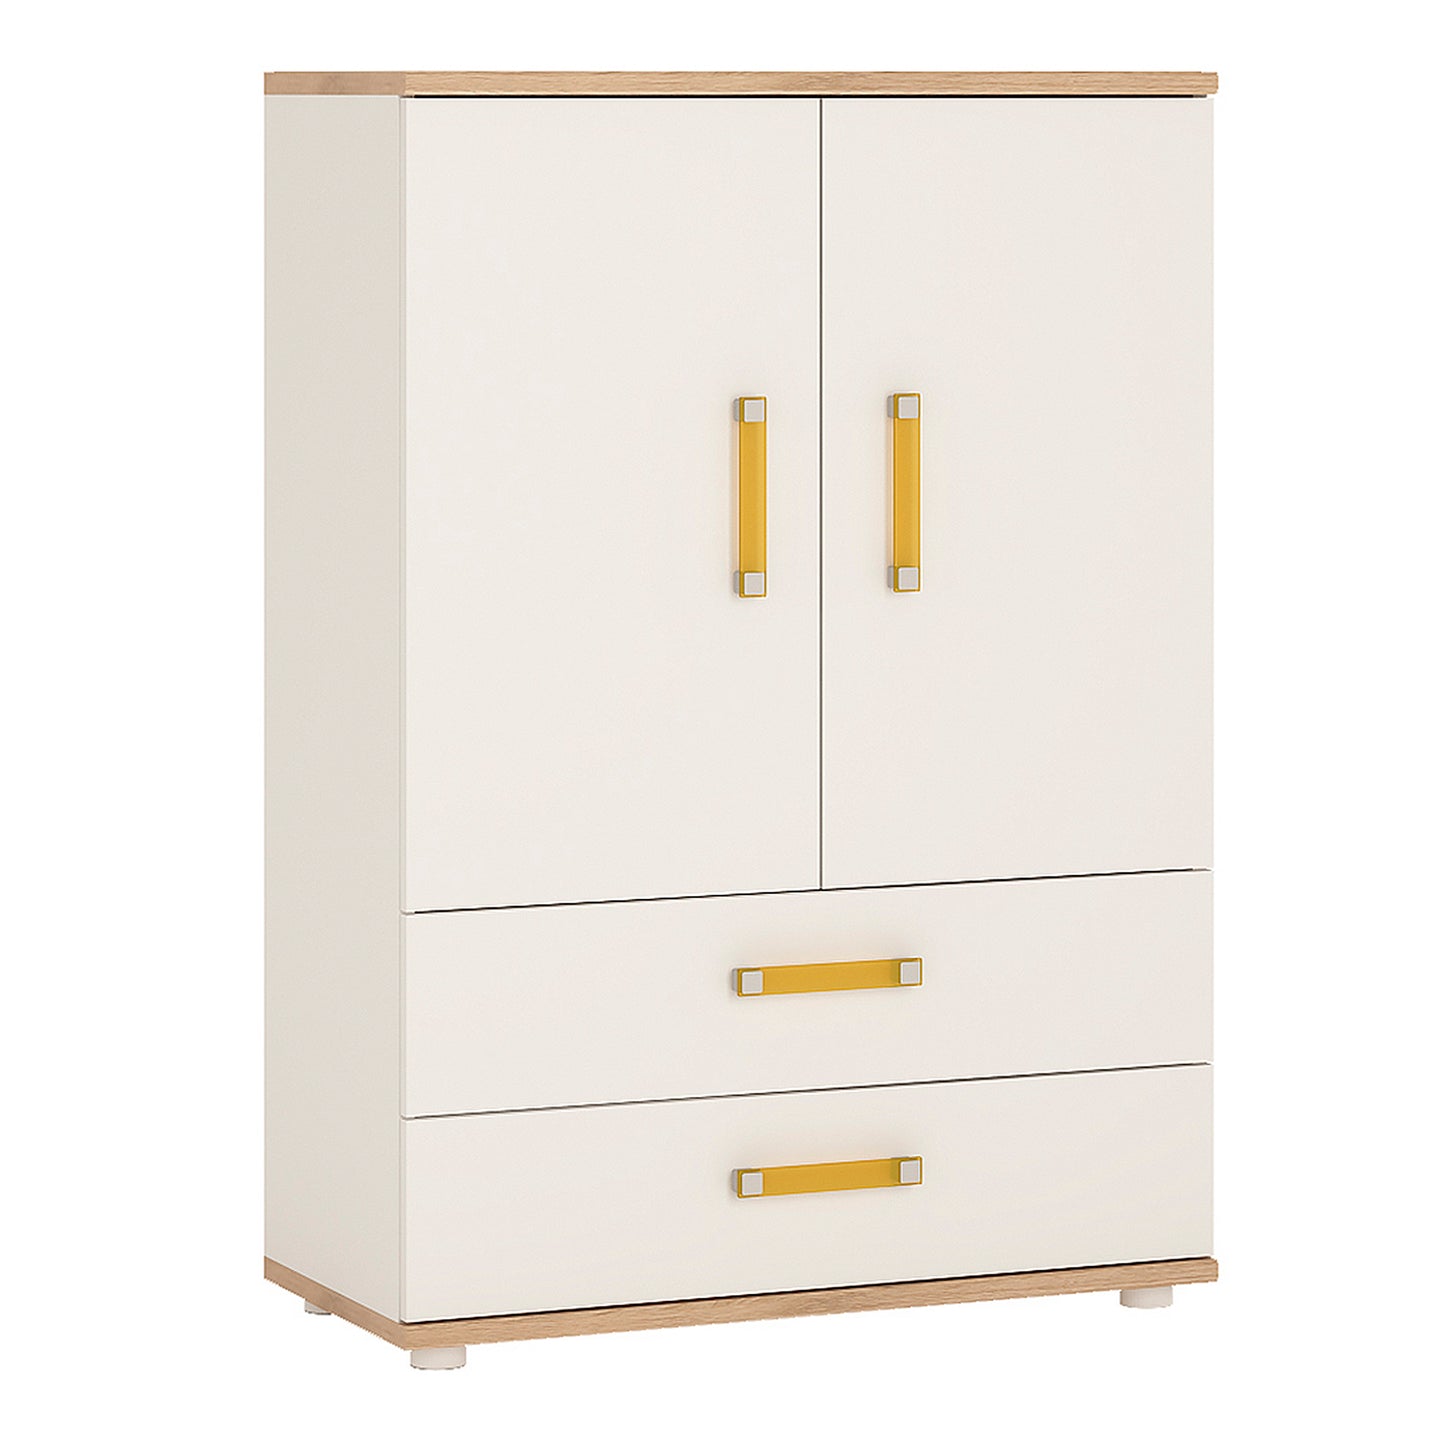 4Kids  2 Door 2 Drawer Cabinet in Light Oak and white High Gloss (orange handles)